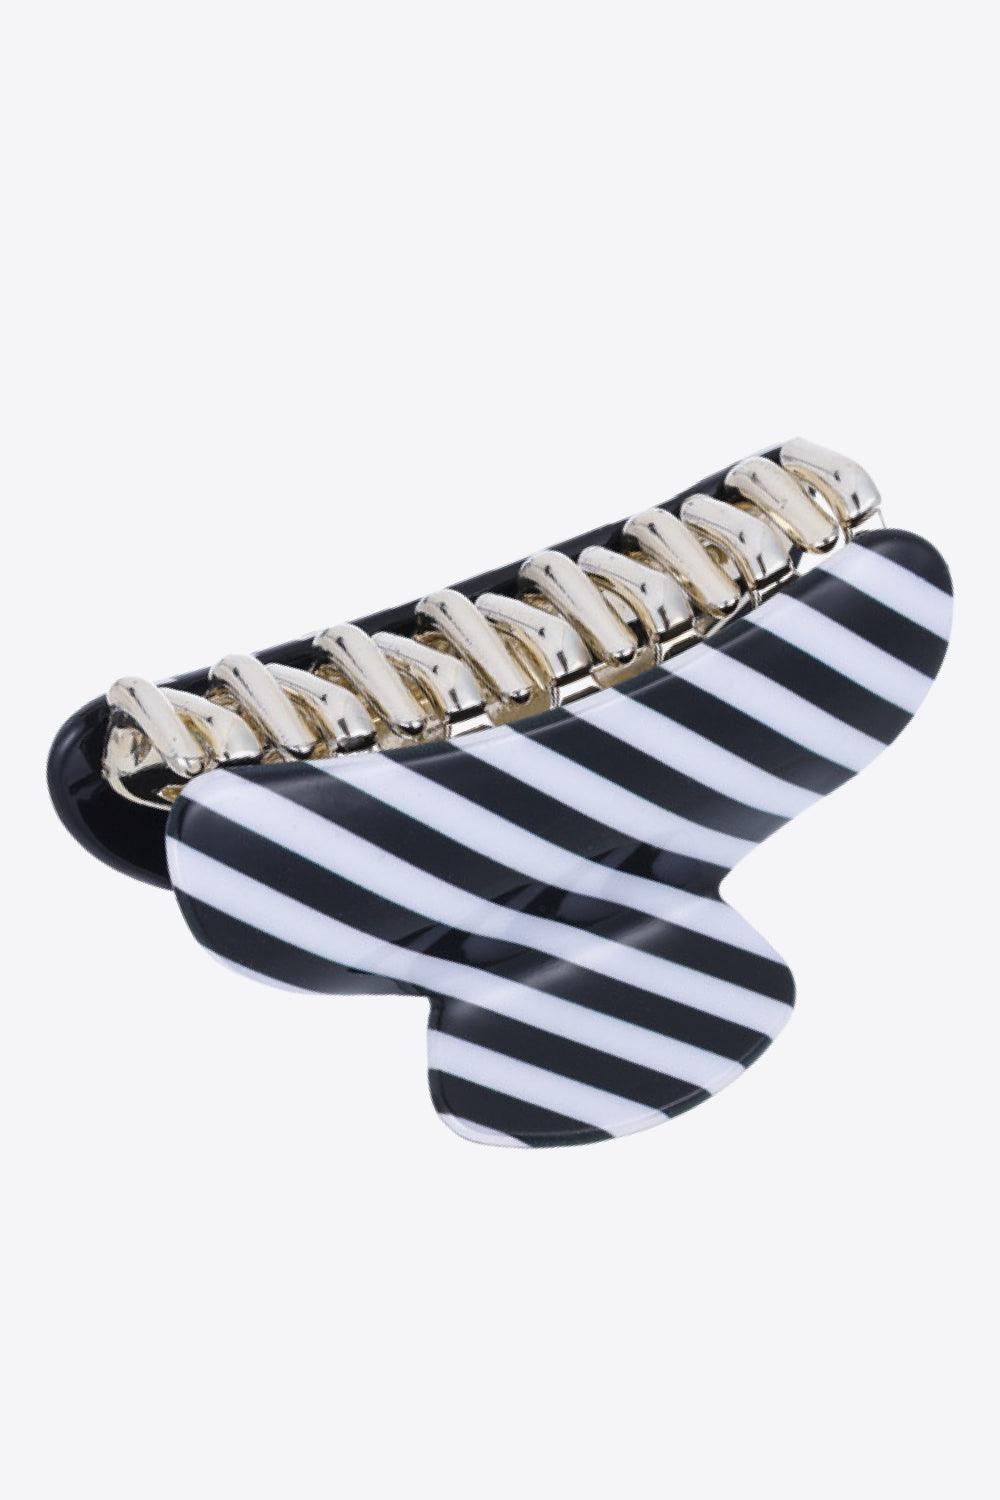 Striped Claw Clip - Lab Fashion, Home & Health